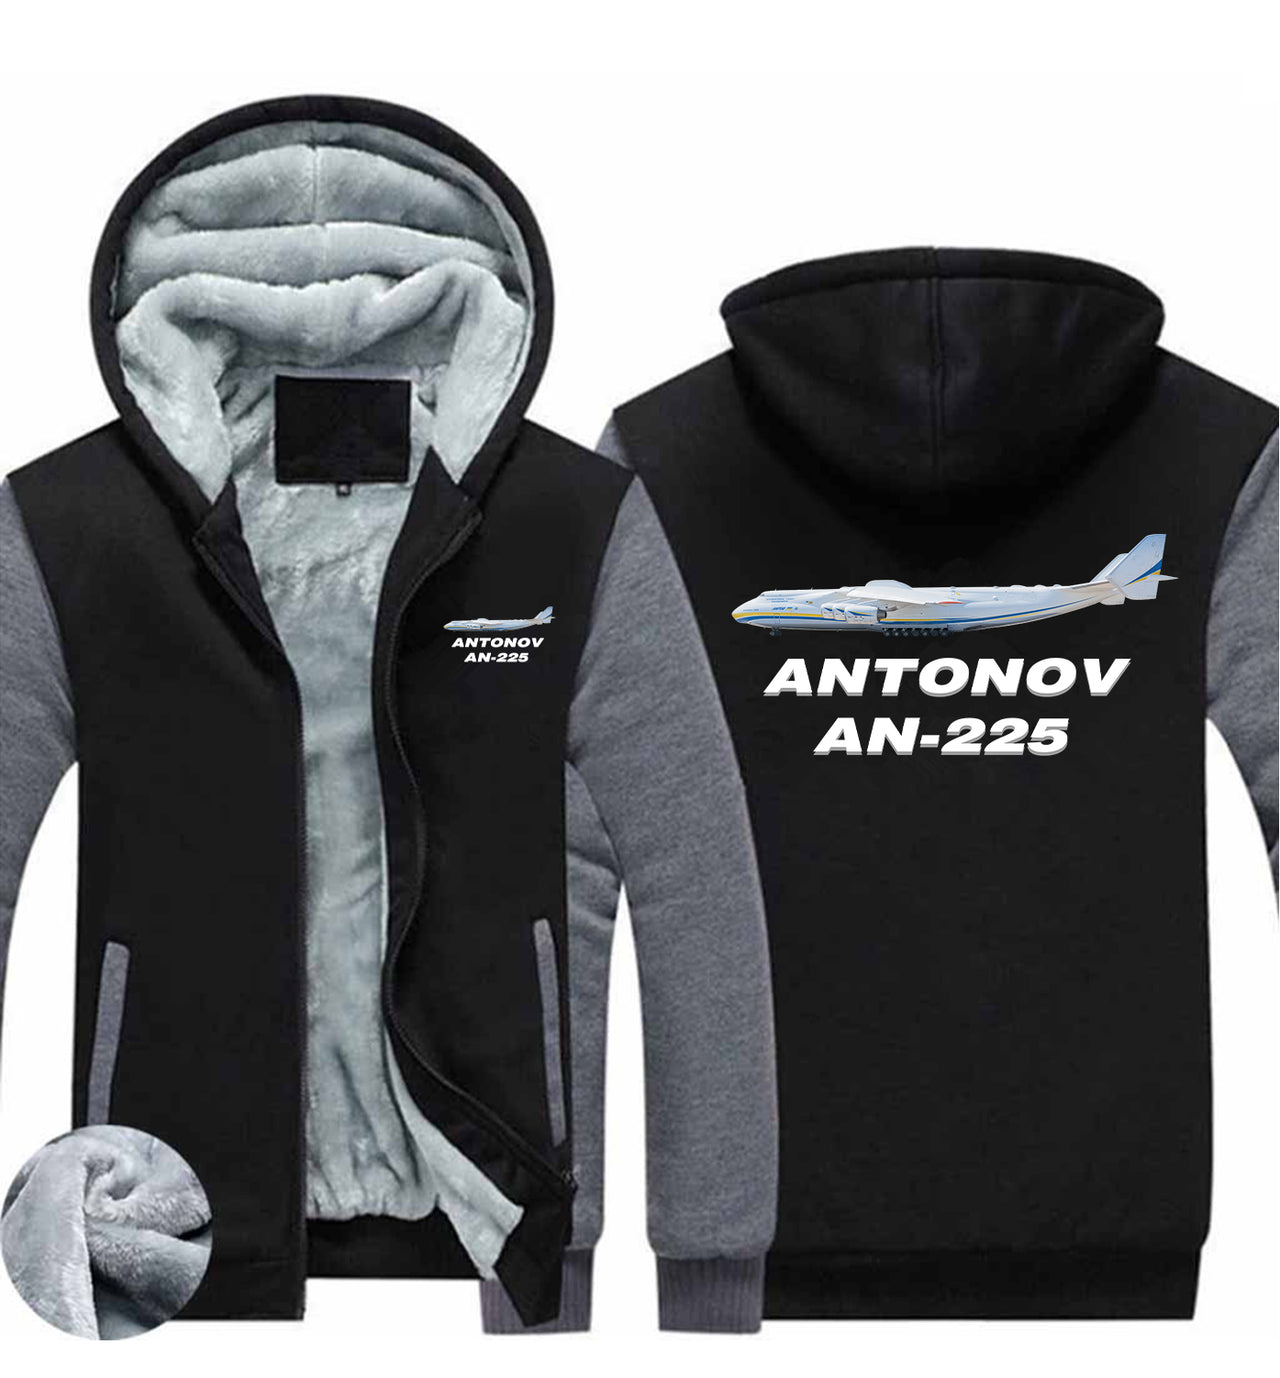 The Antonov AN-225 Designed Zipped Sweatshirts